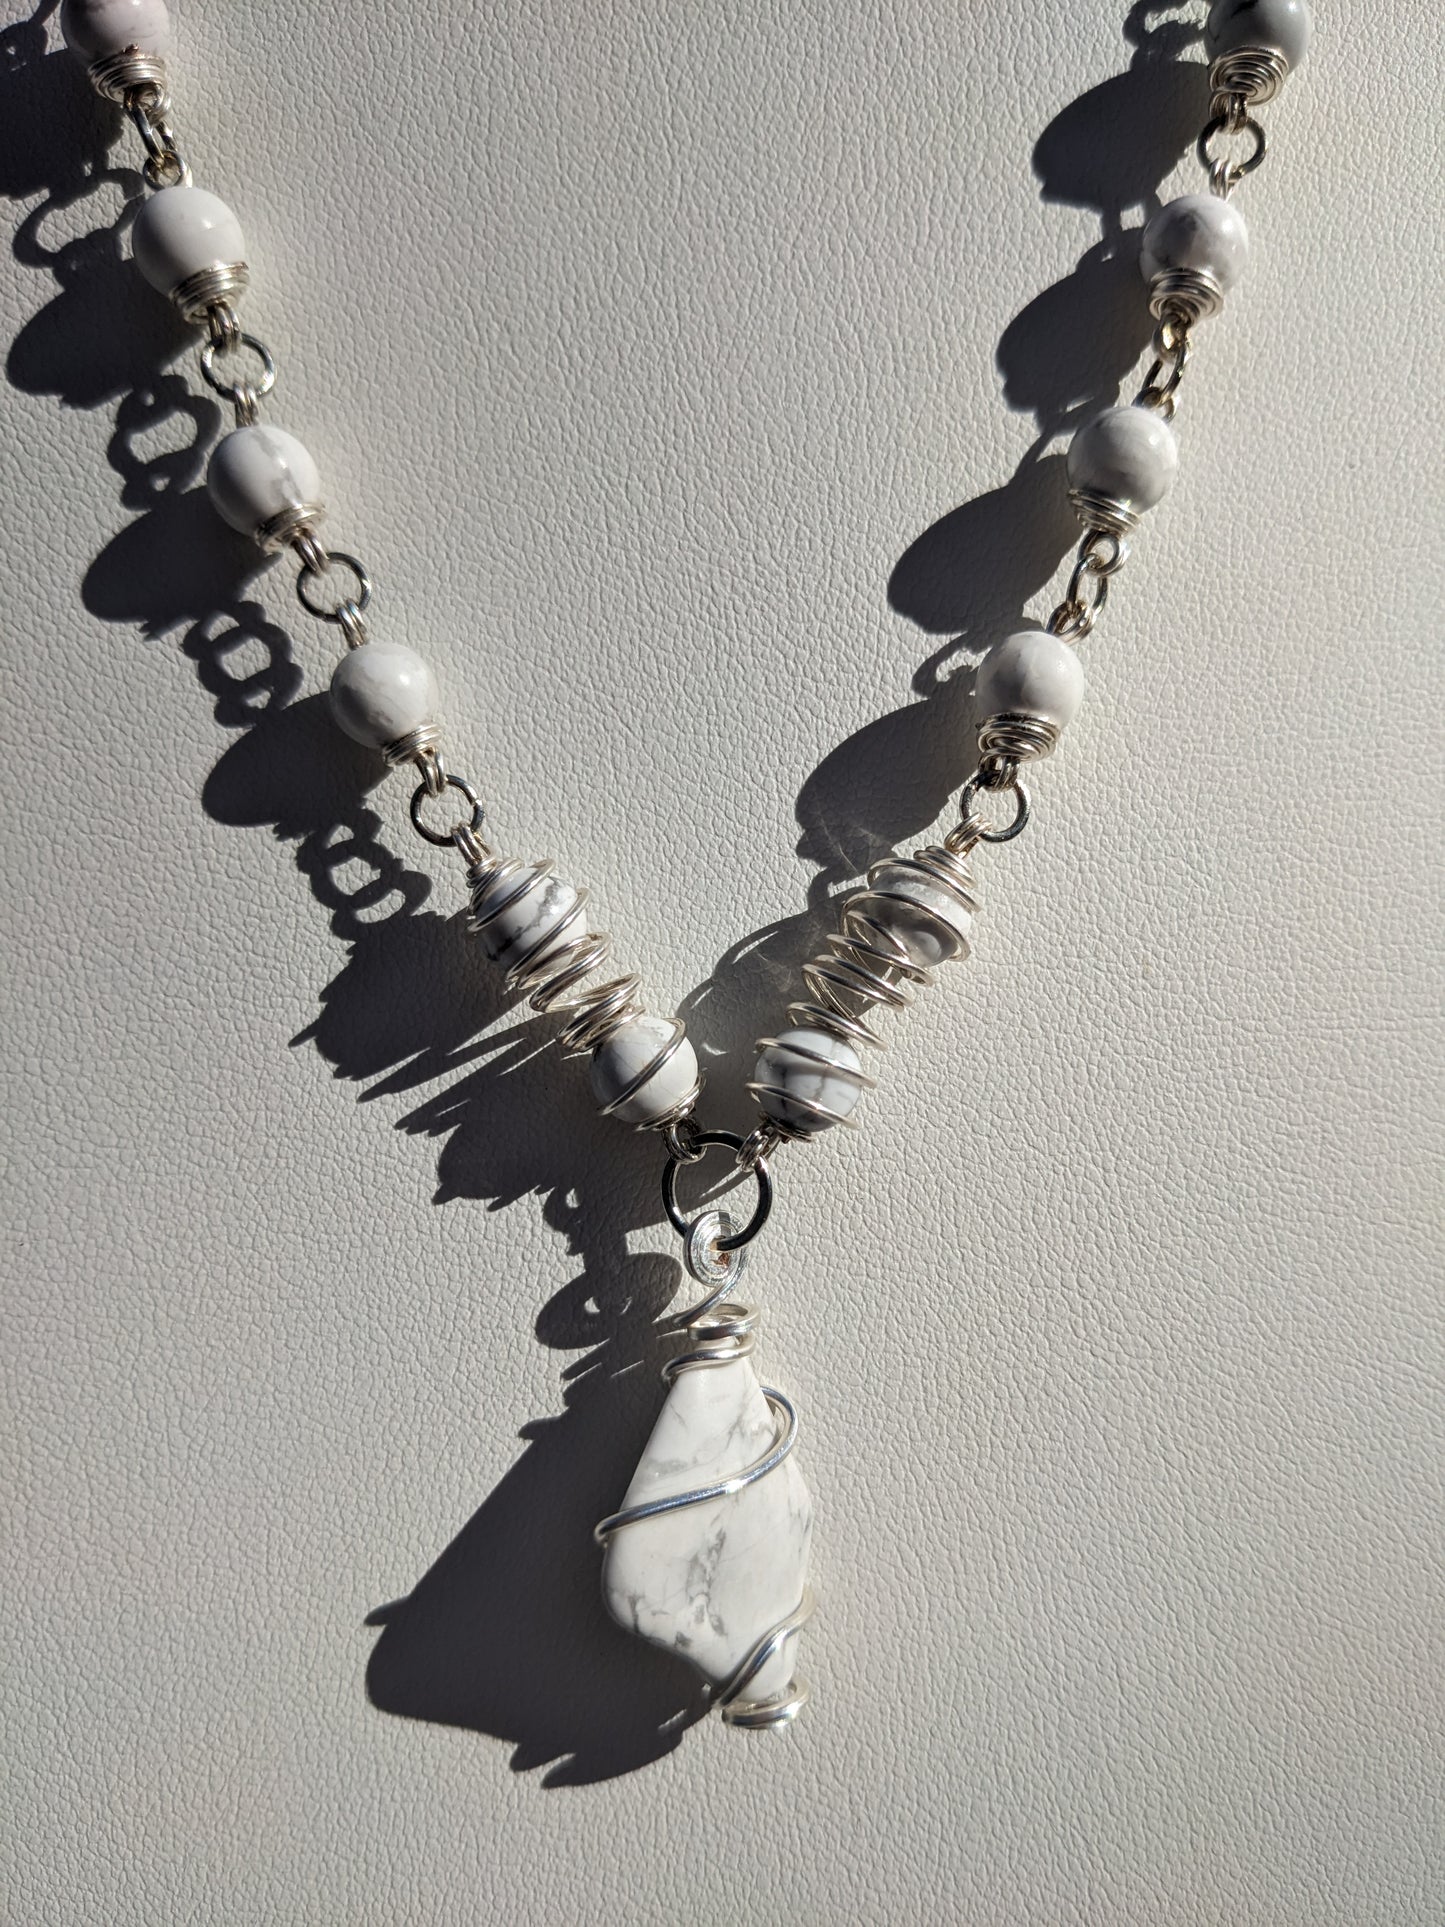 Howlite necklace